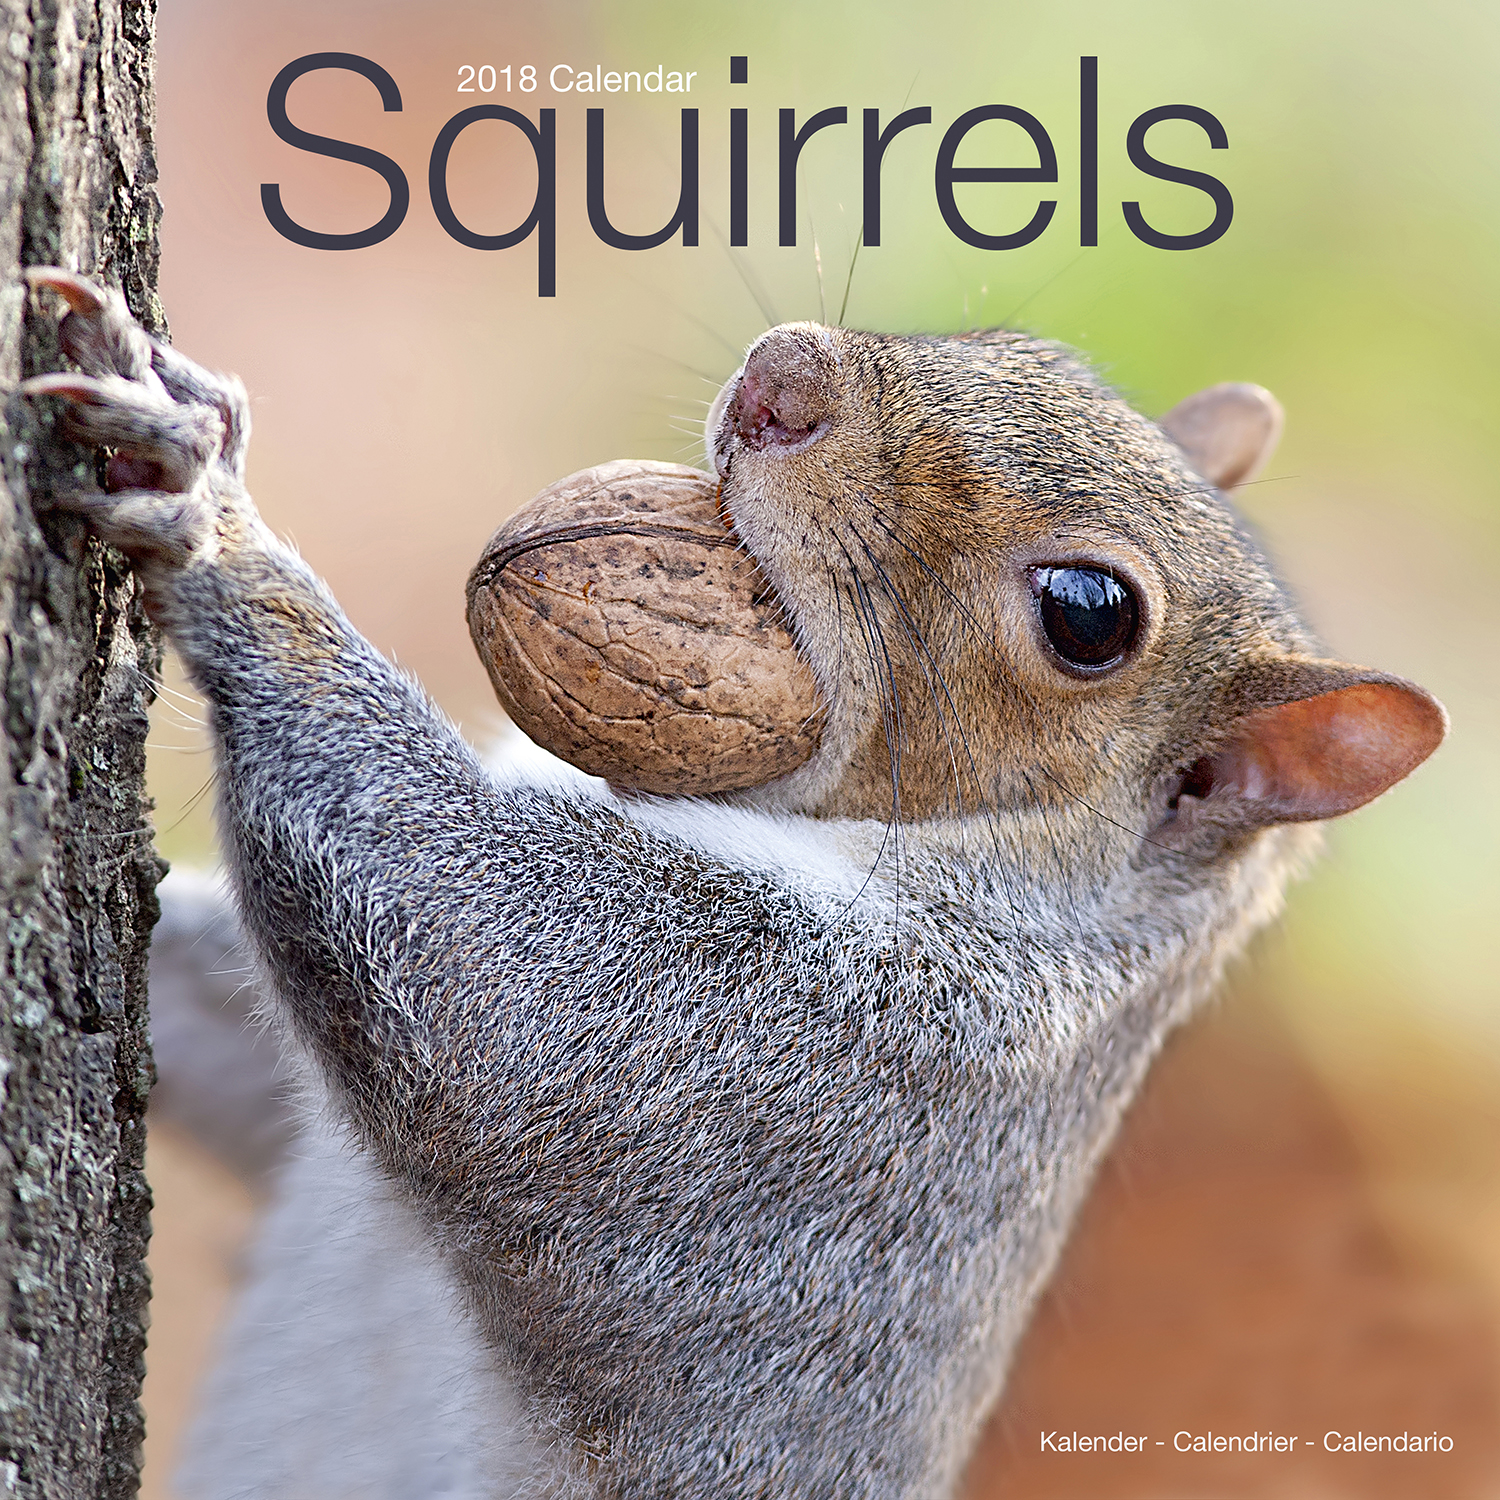 squirrels-calendar-2018-30148-18-wildlife-animals